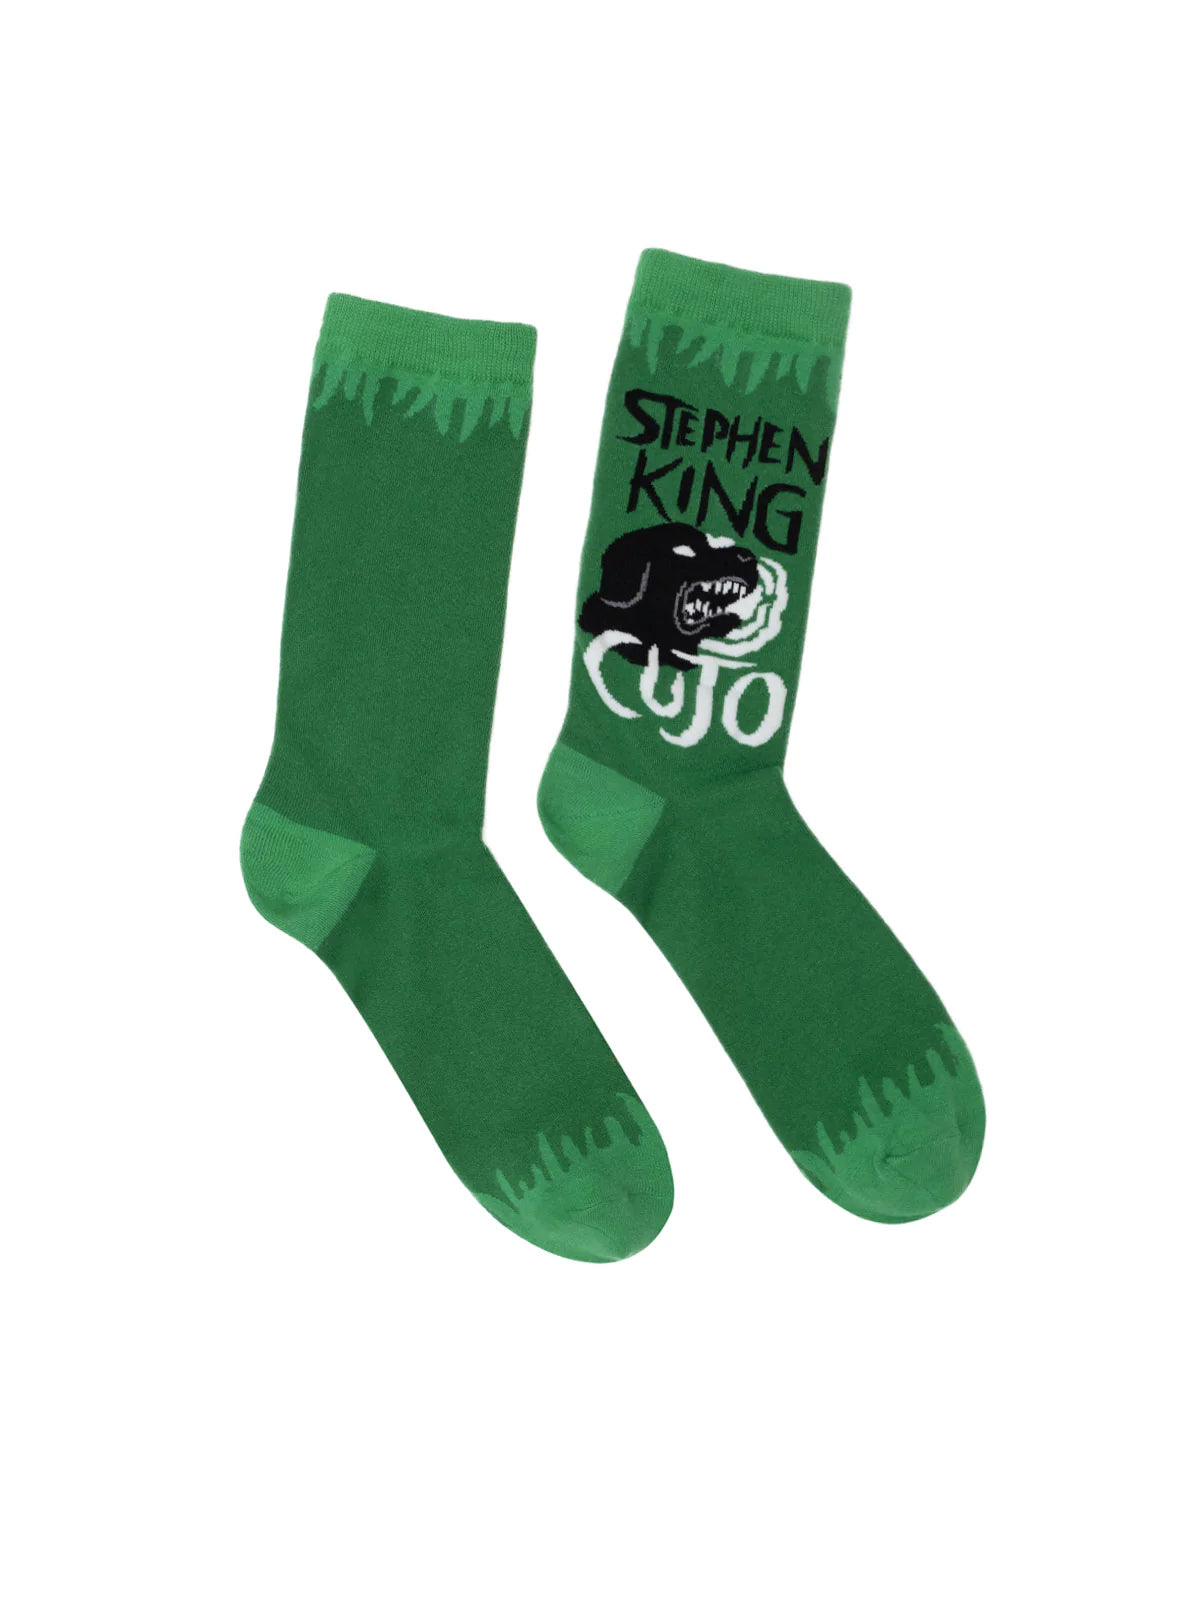 Cujo Socks - Unisex - Large gift socks socks